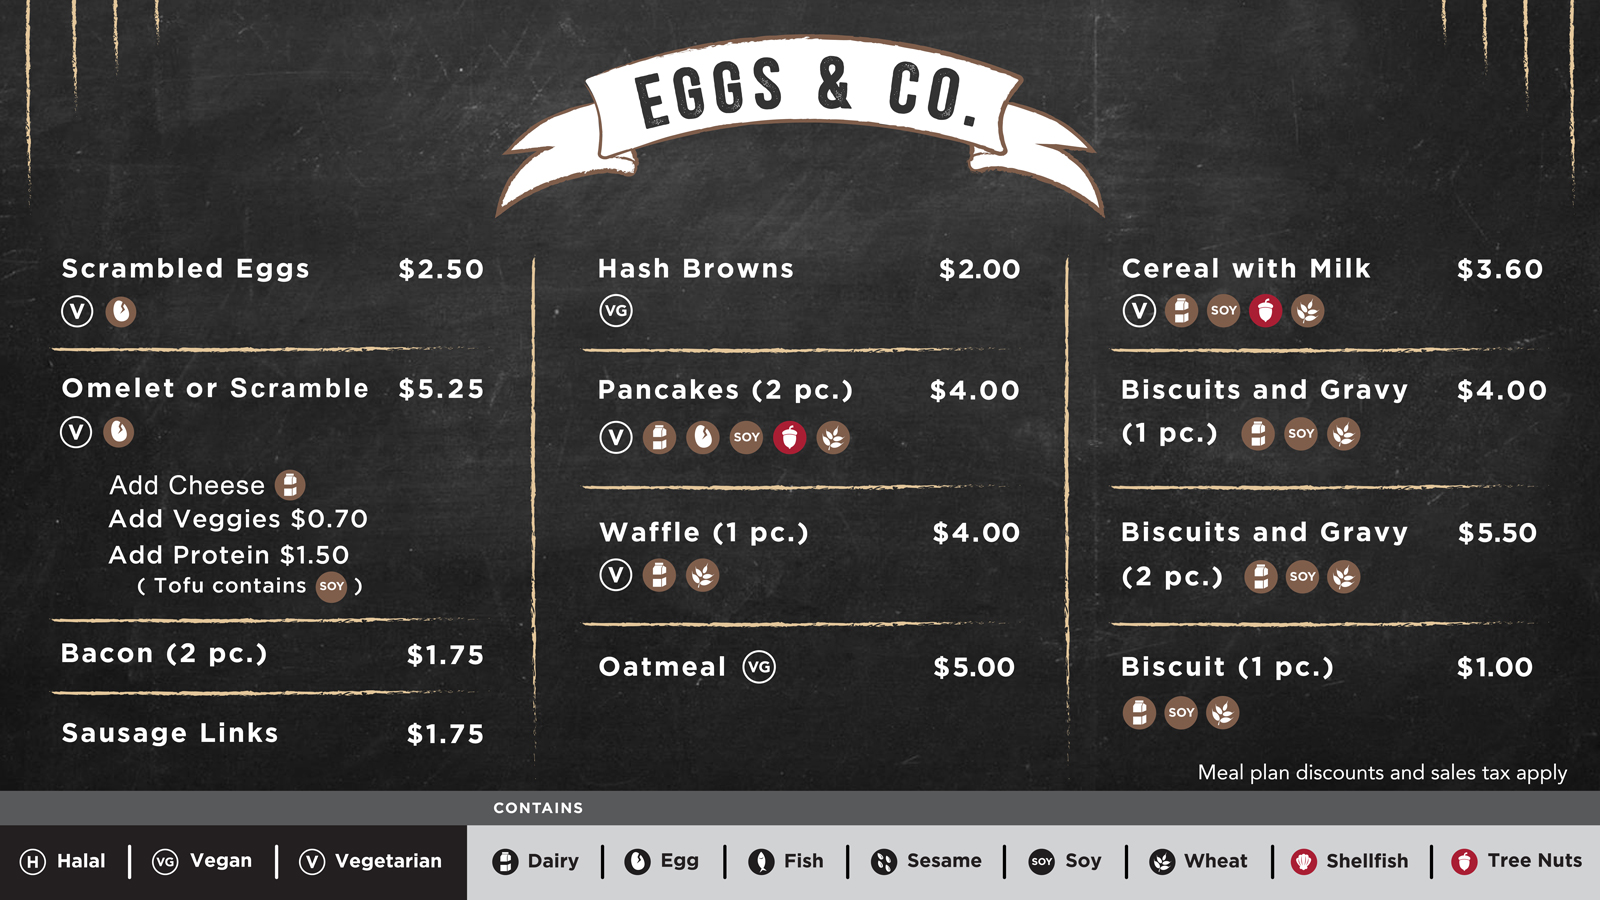 The Eggs and Co. menu board